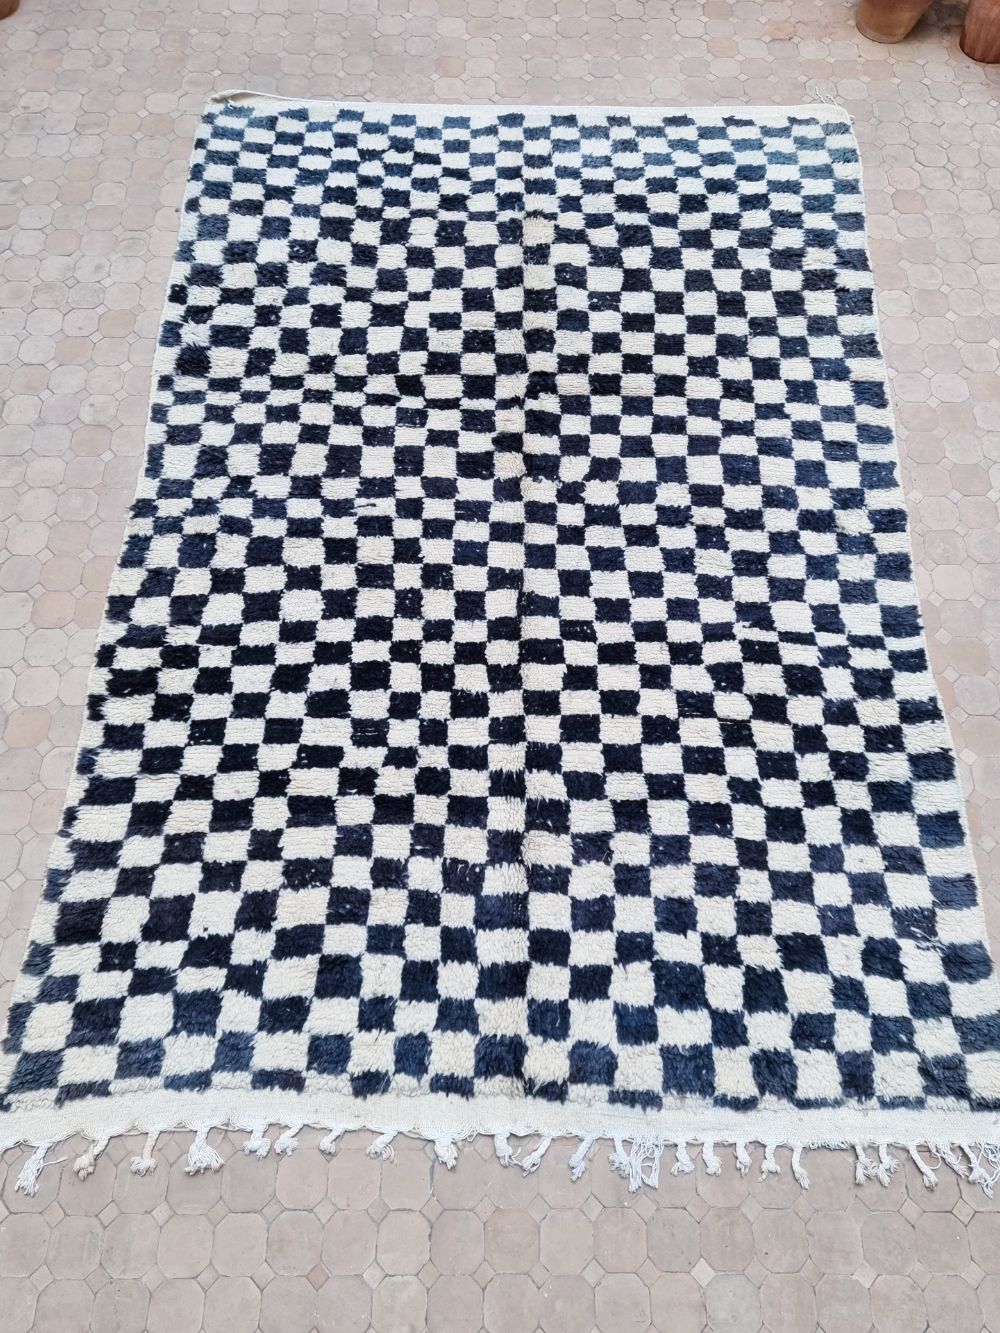 Moroccan Checkered Rug 290x195cm